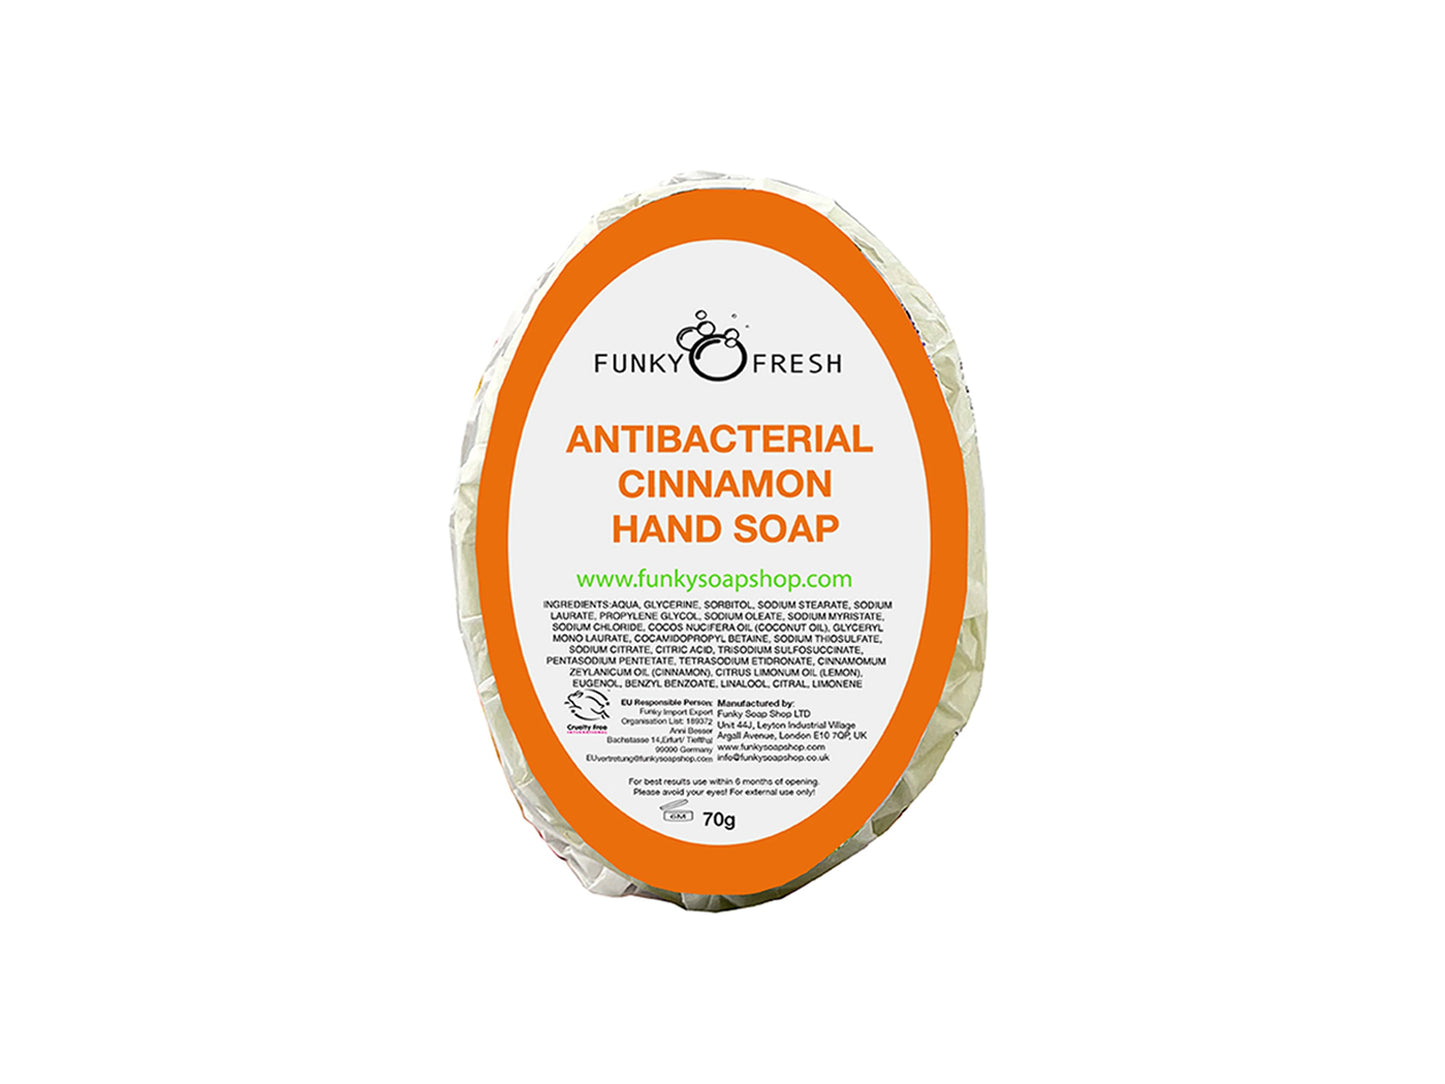 Antibacterial Cinnamon Hand Soap - Funky Soap Shop